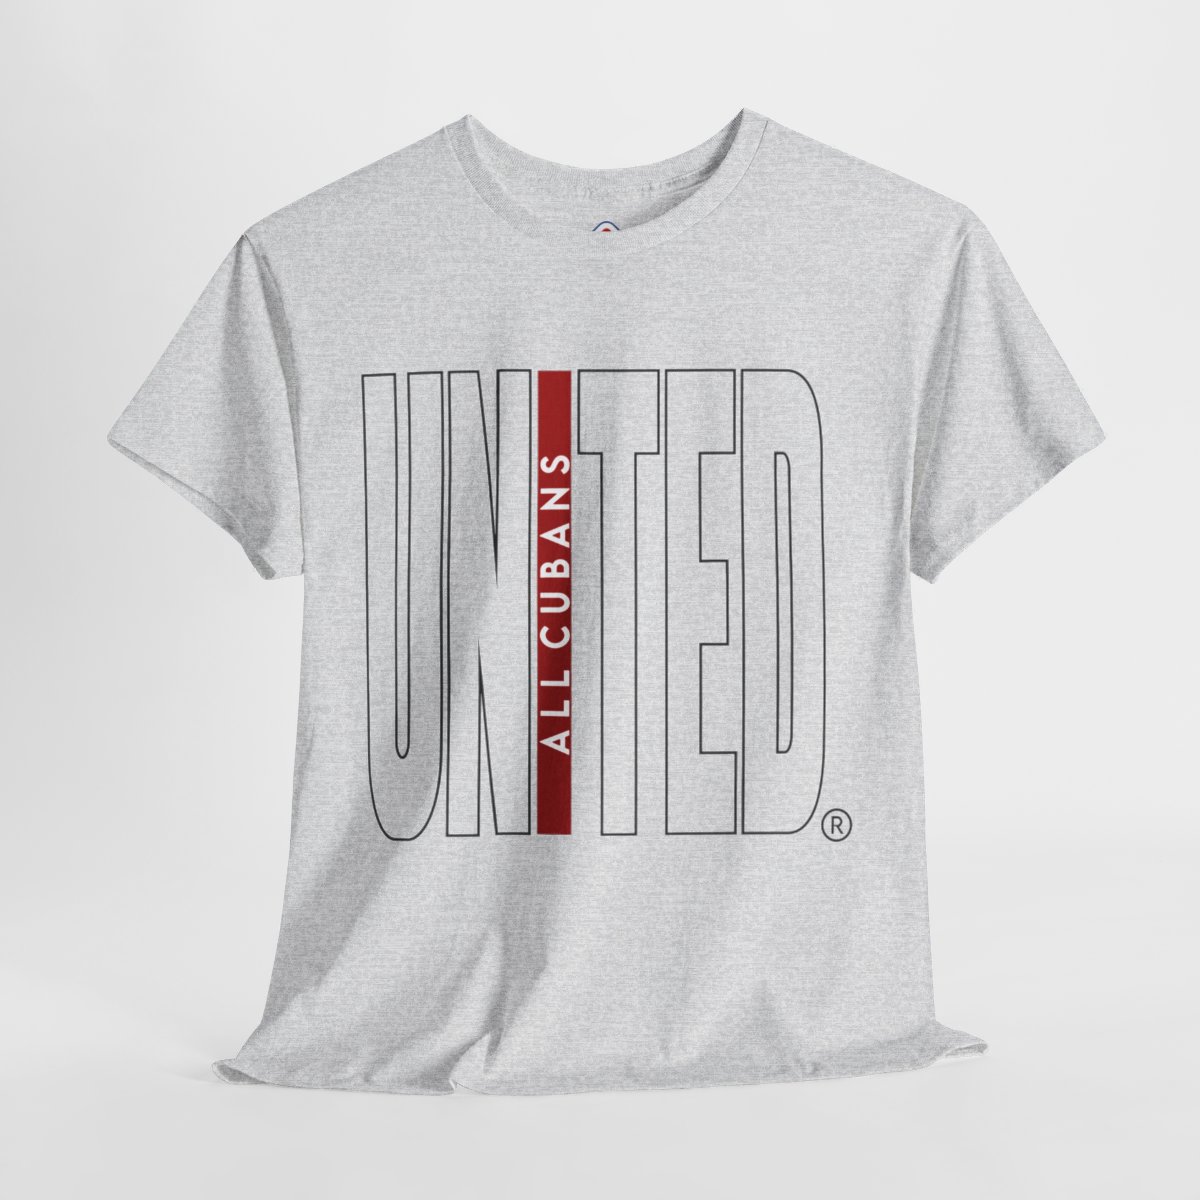 UNITED® LINE. Colección UNITED®| Unisex